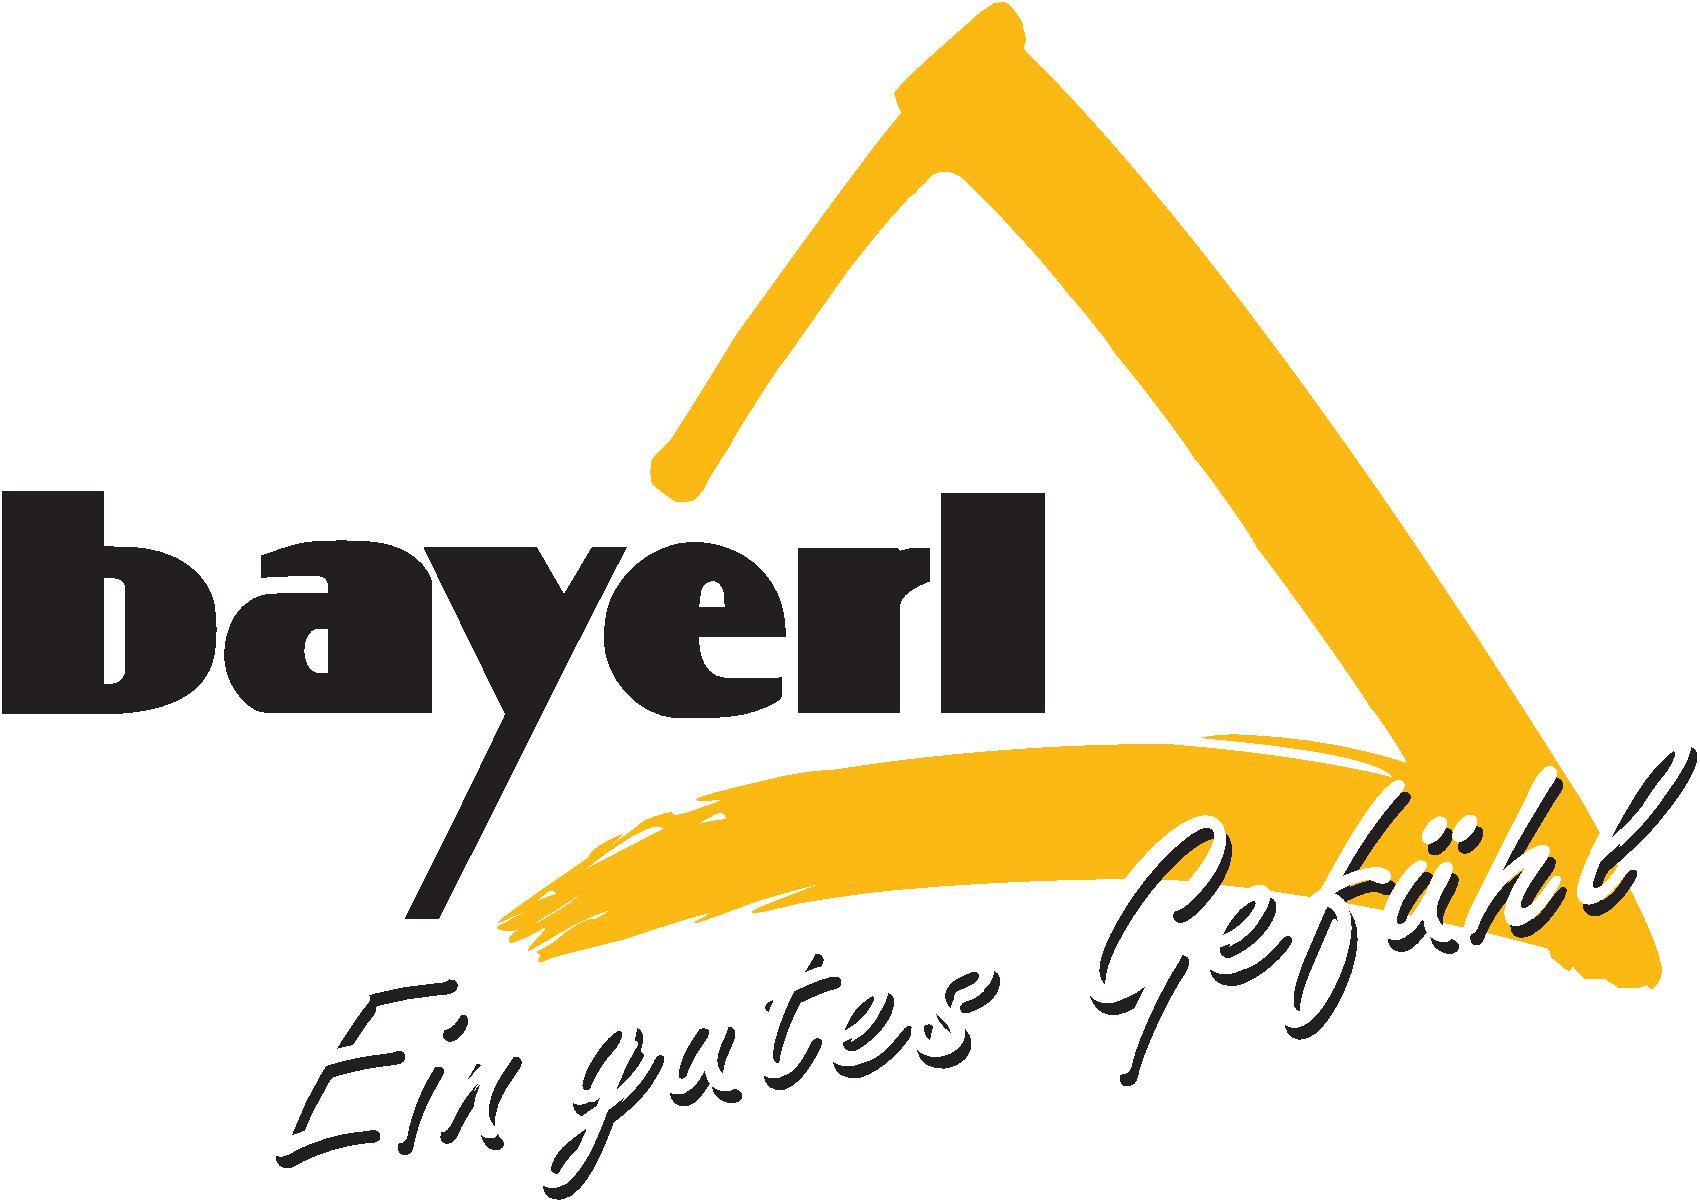 Bayerl Immobilien GmbH, Karlsruhe